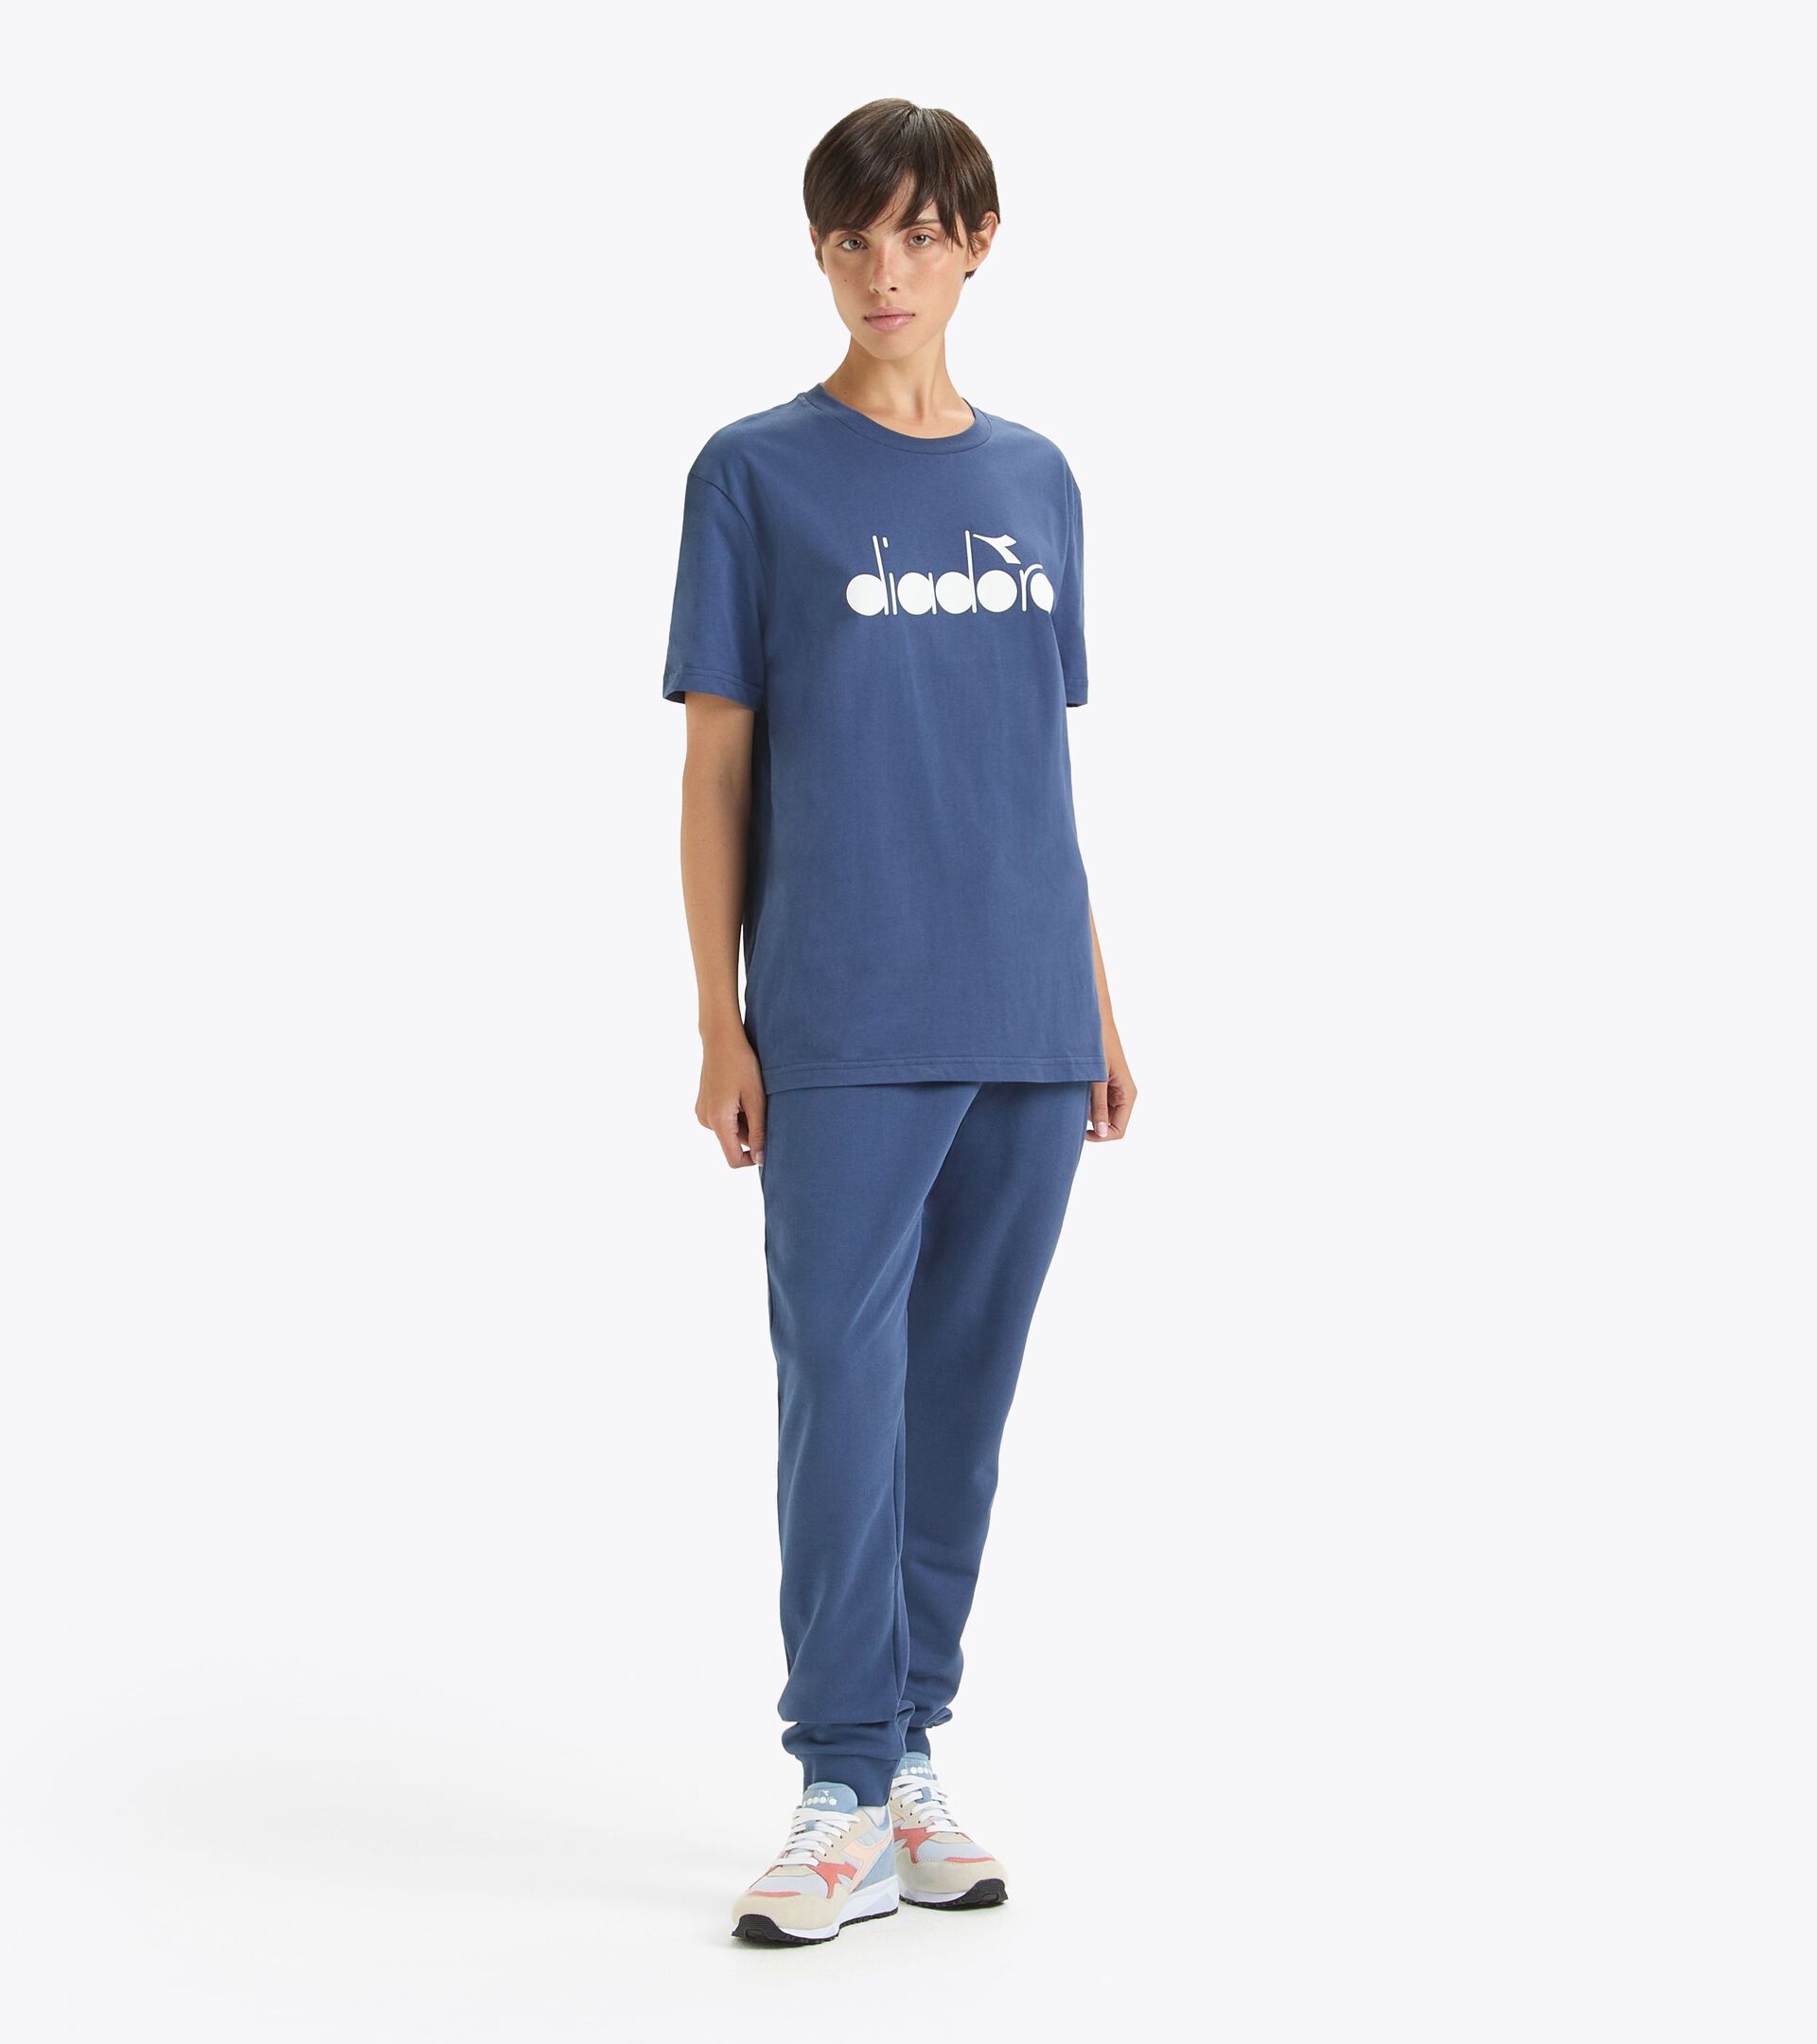 Camiseta - Made in Italy - Gender neutral  T-SHIRT SS LOGO OCEANA - Diadora